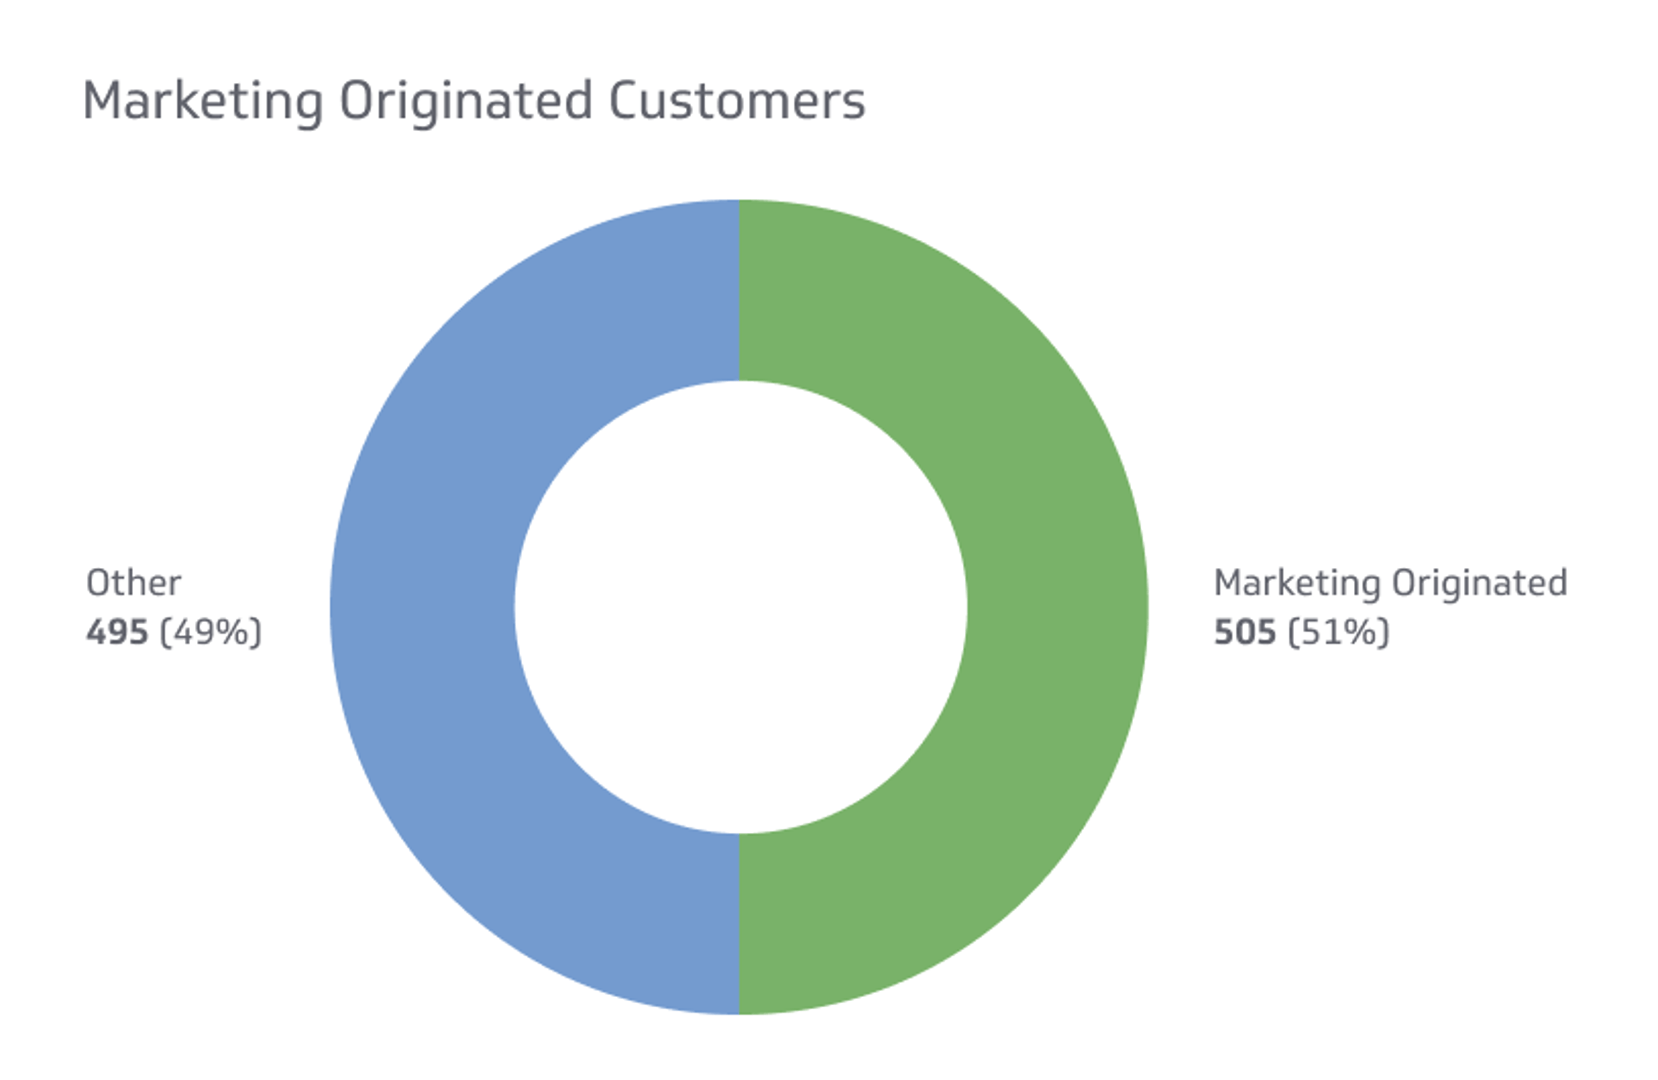 Related KPI Examples - Marketing Originated Customers Metric